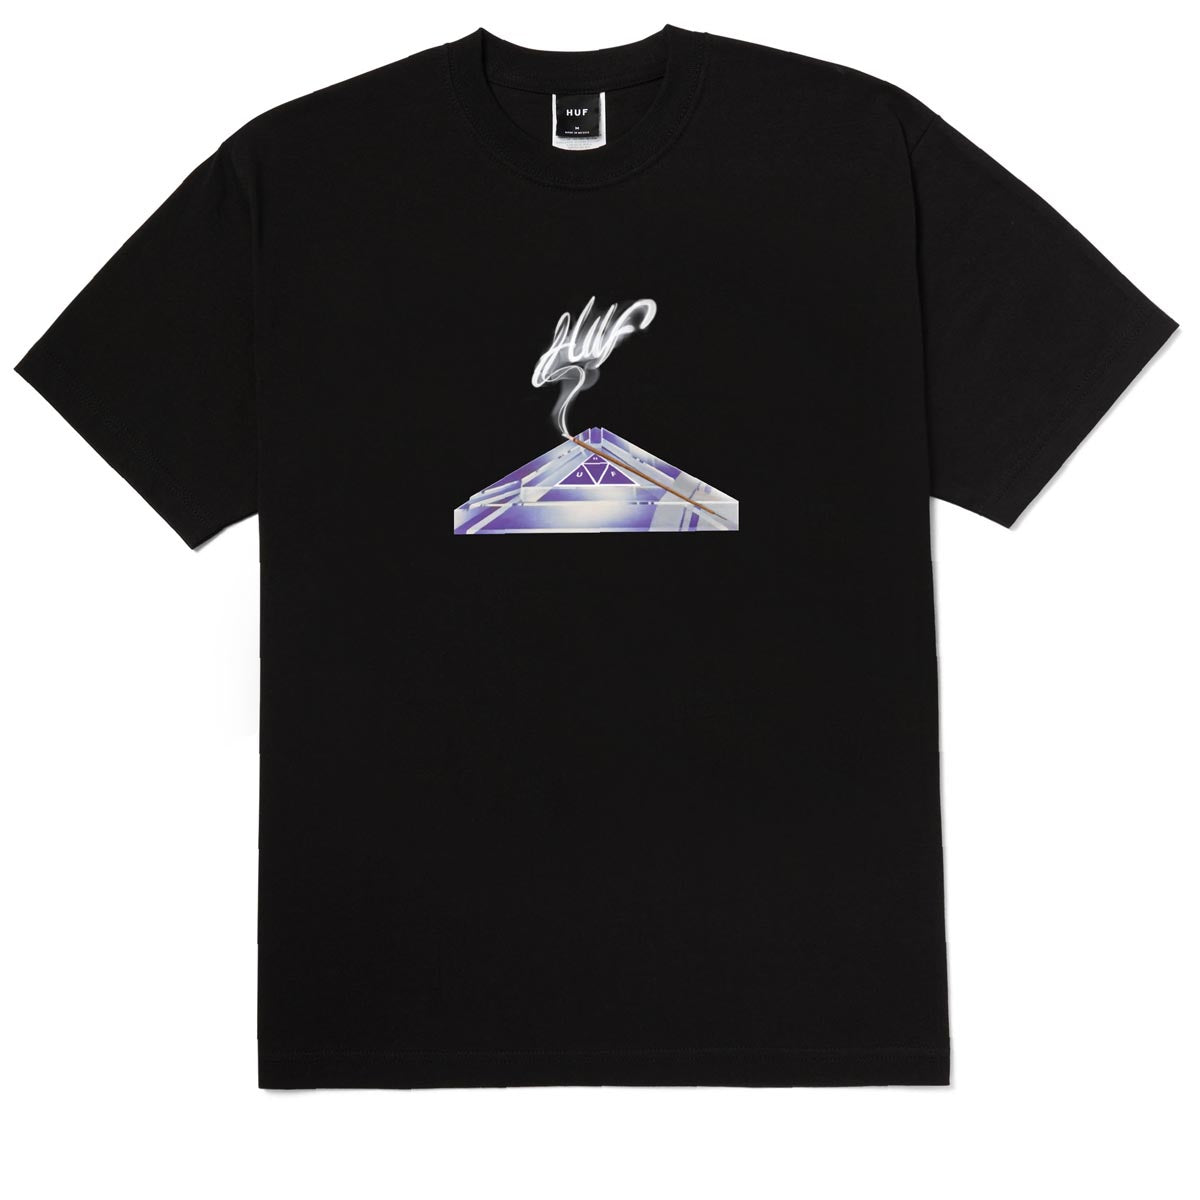 HUF Scent T-Shirt - Black image 1